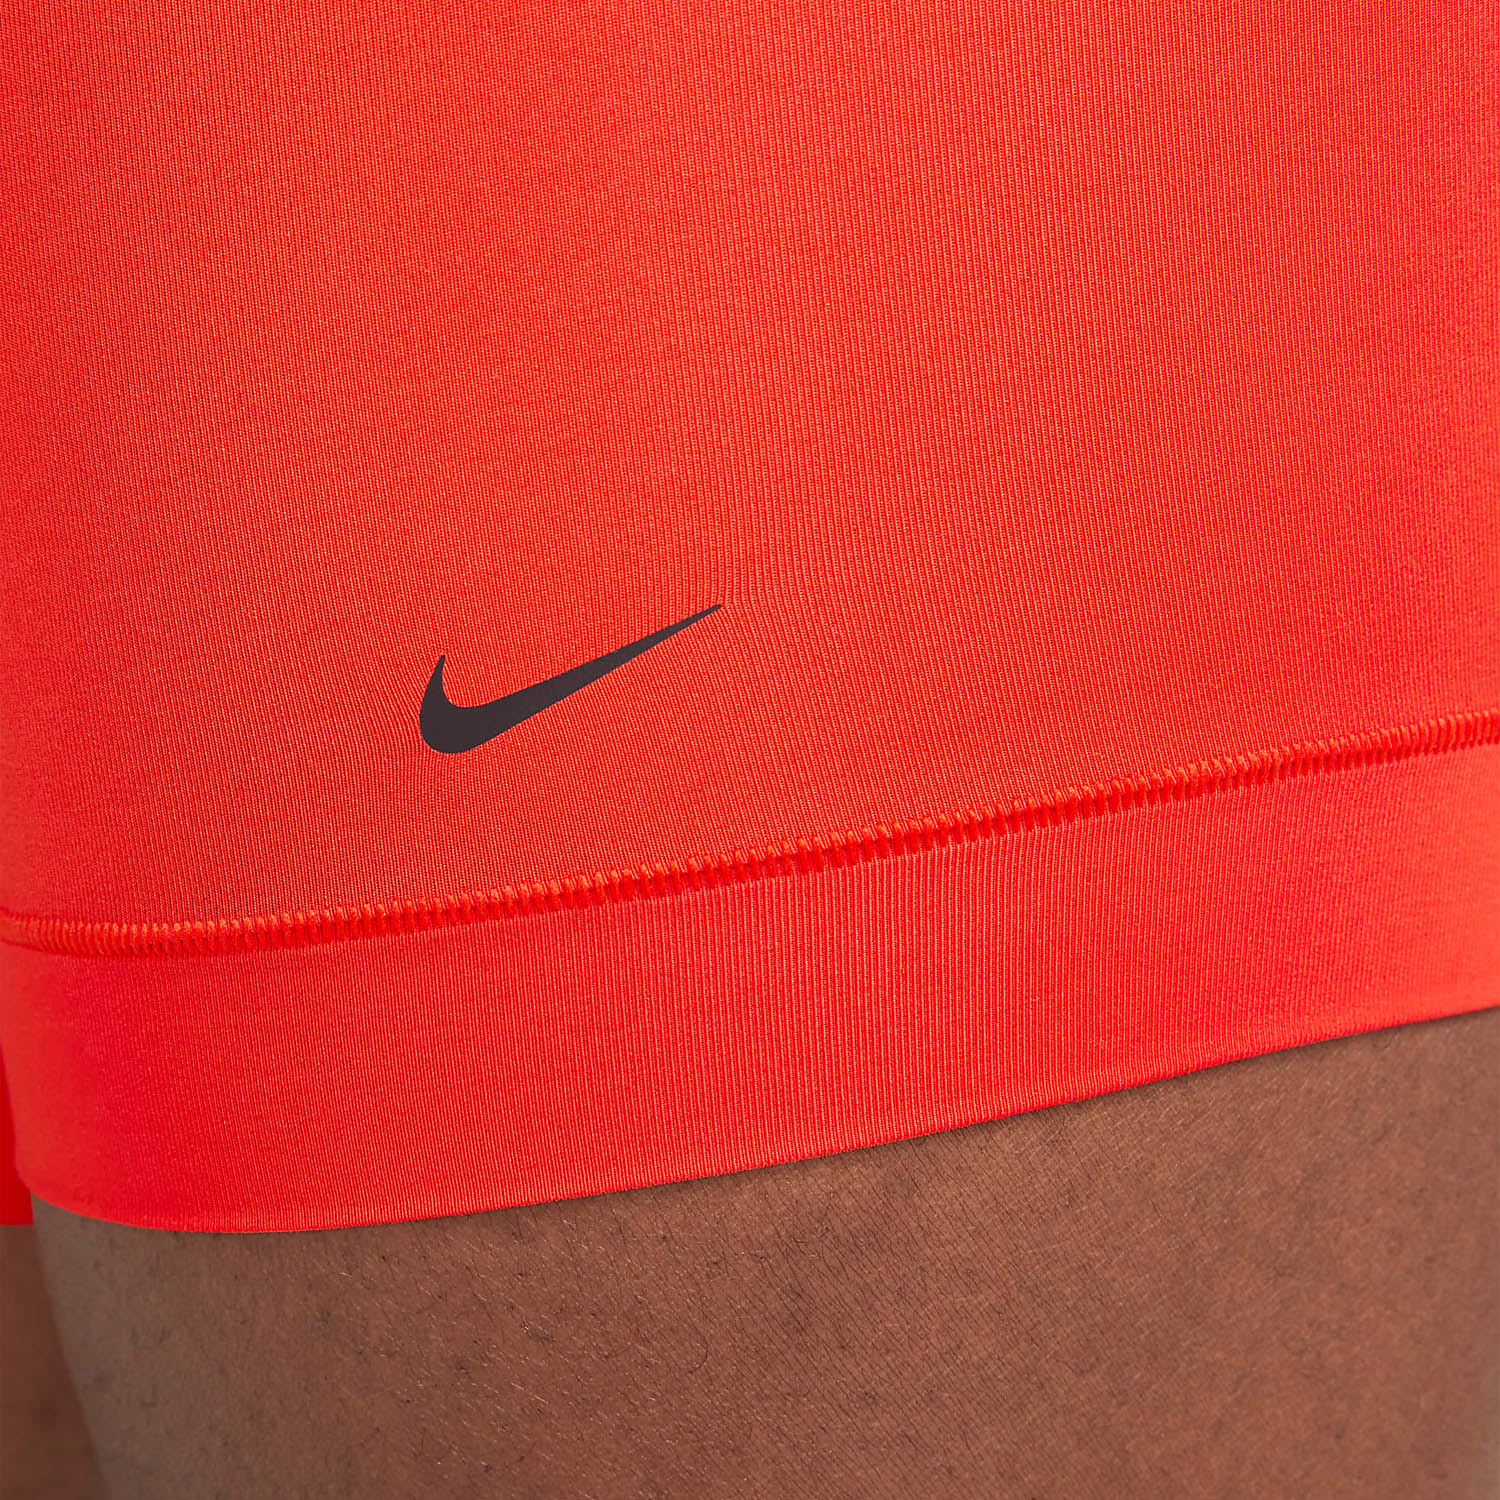 Nike Brief x 3 Boxer - Team Orange/Uni Blue/Black